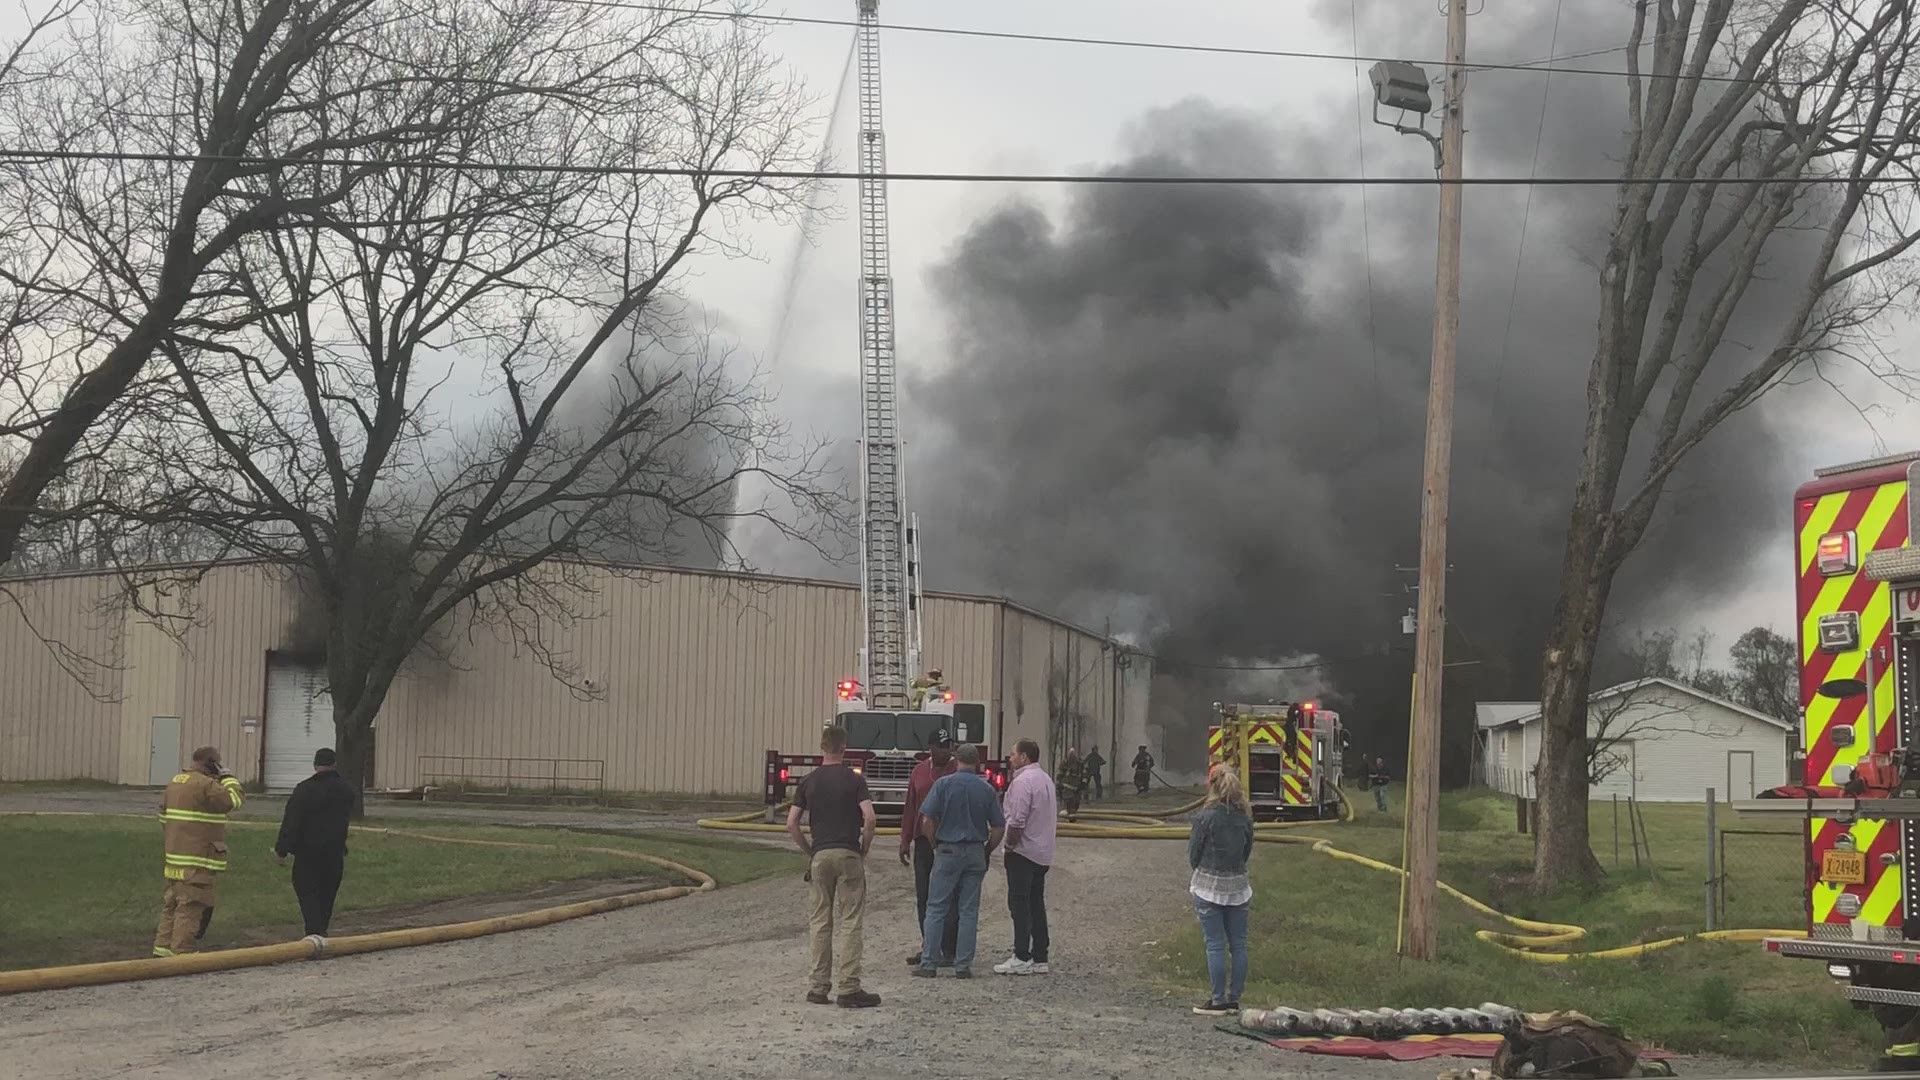 Officials confirm active fire at Noark Enterprises off Highway 70